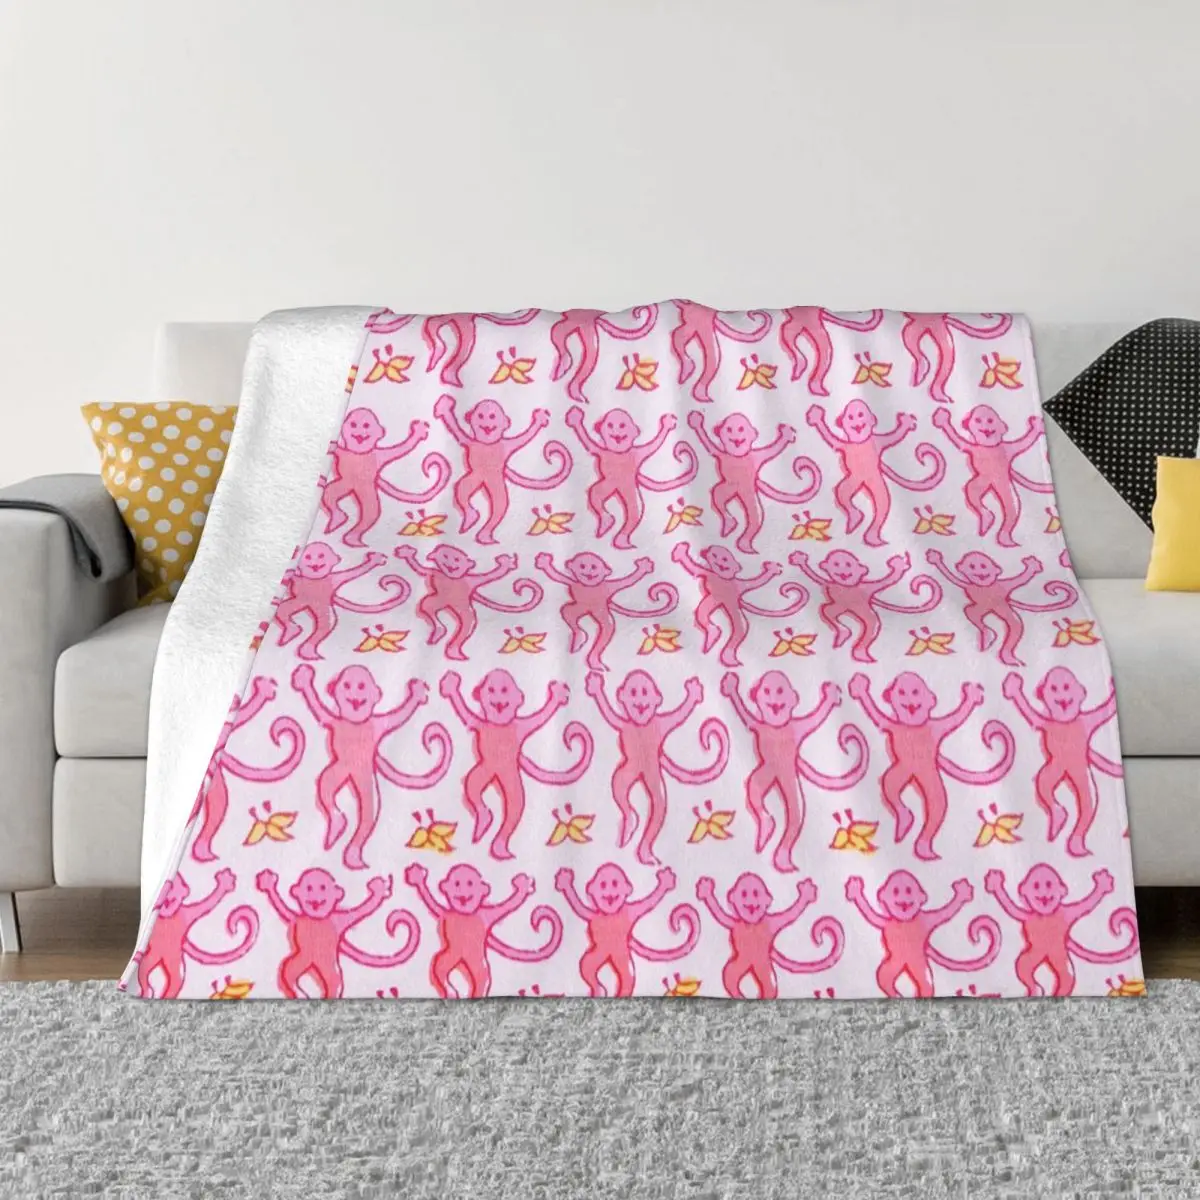 

Pink Roller Rabbit Blankets Coral Fleece Plush Autumn/Winter Cute Animal Super Soft Throw Blanket for Bedding Office Quilt